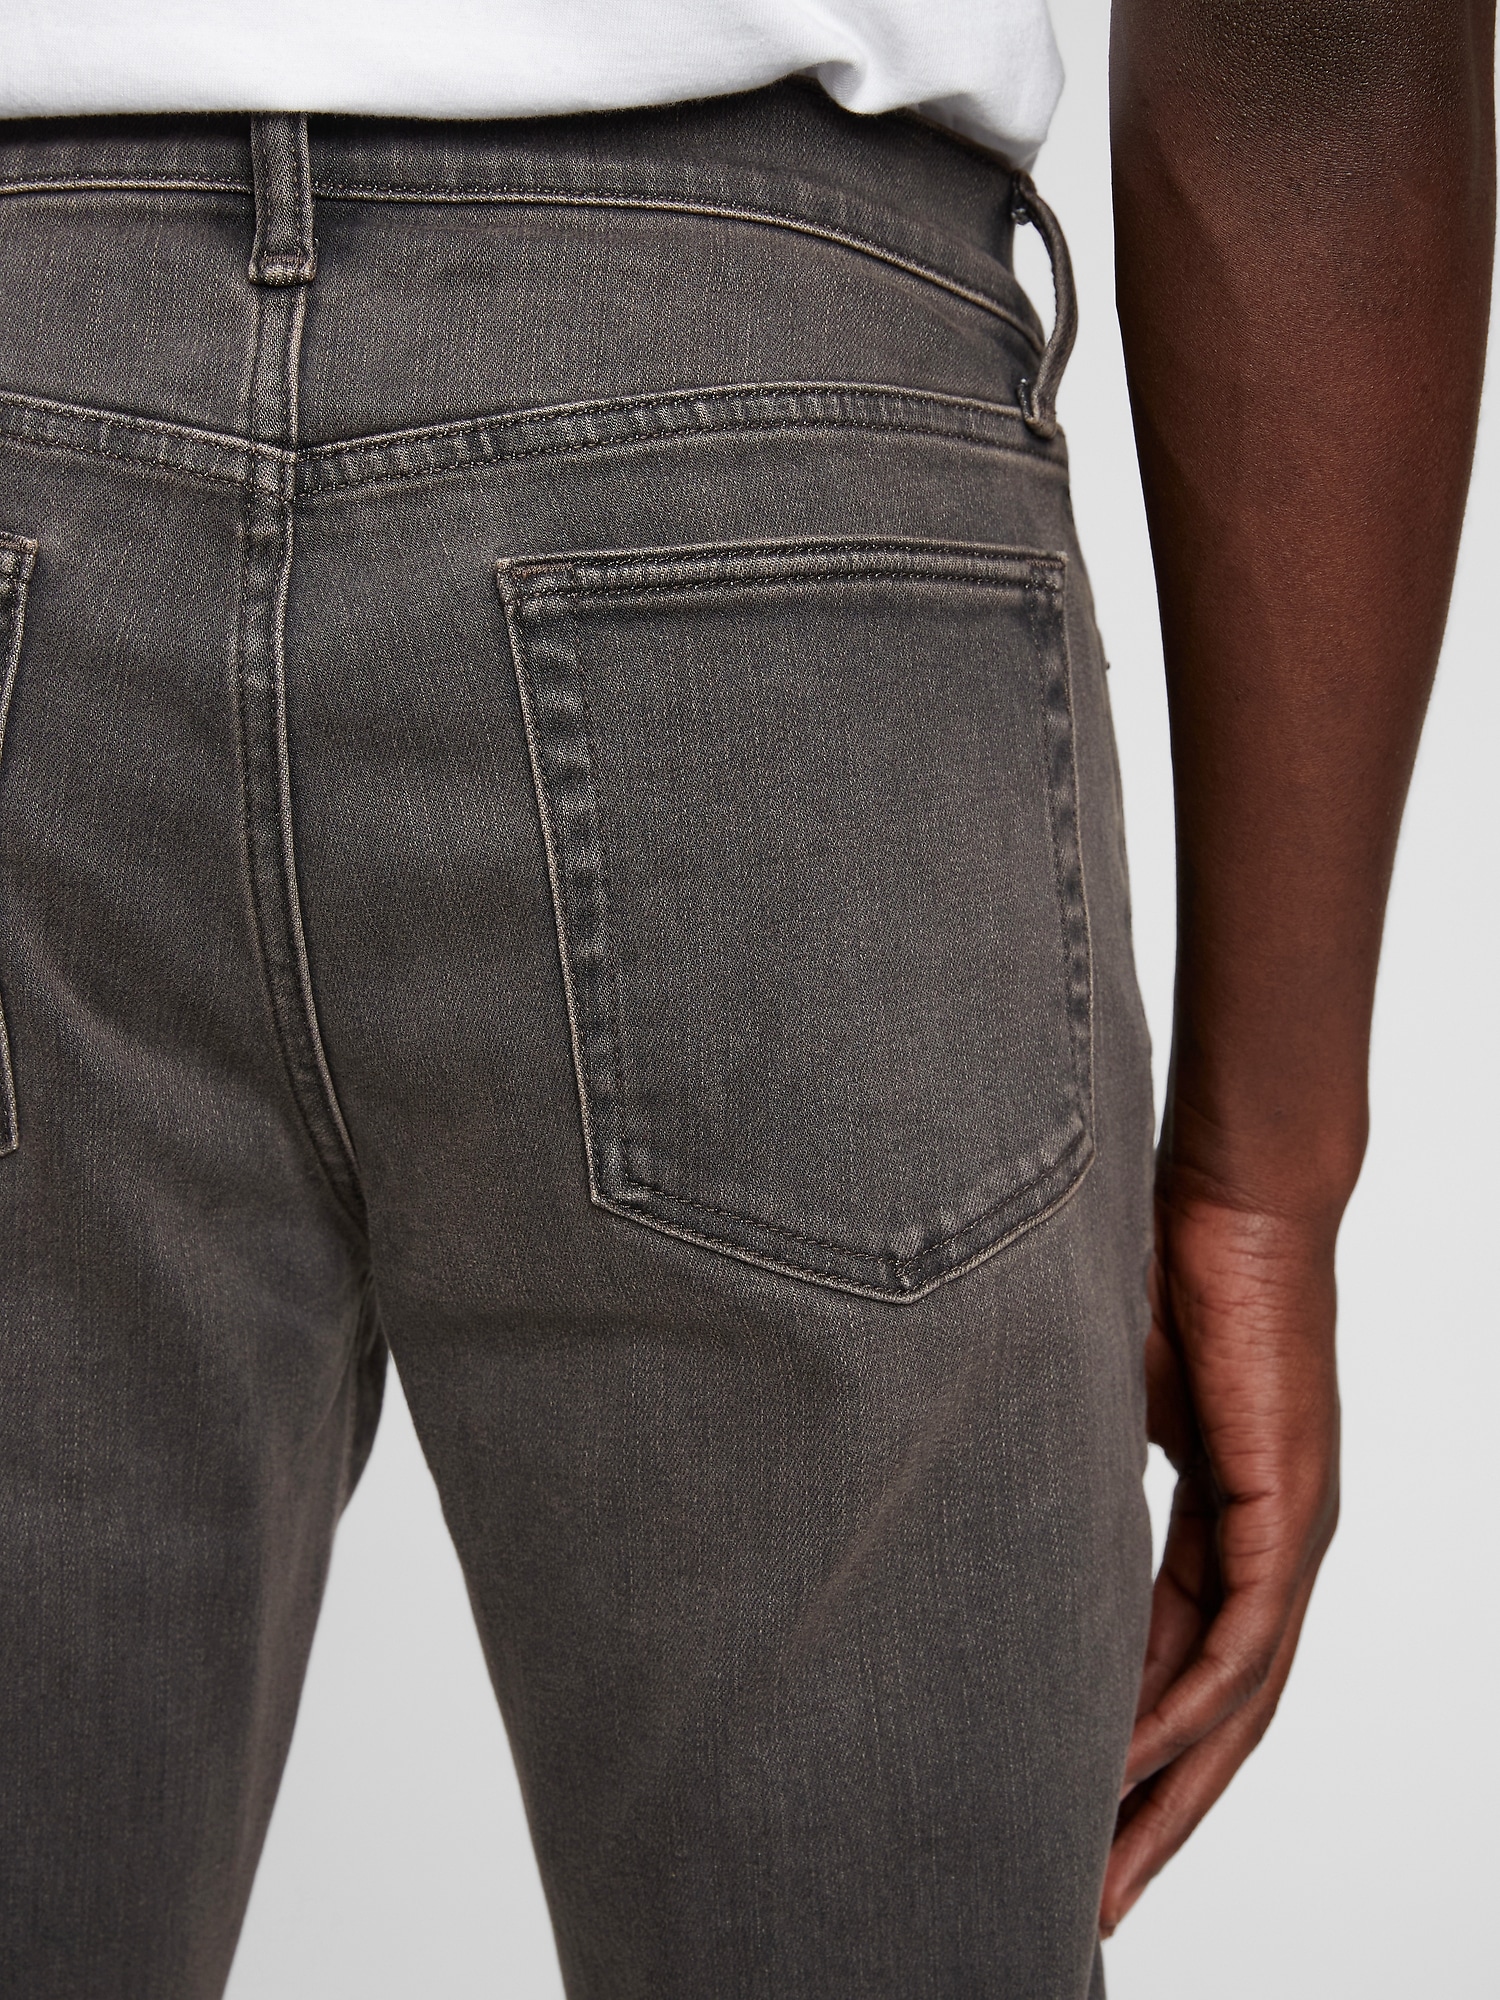 GAP, Jeans, Gap Mens Soft Wear Jeans Slim Taper 3x30